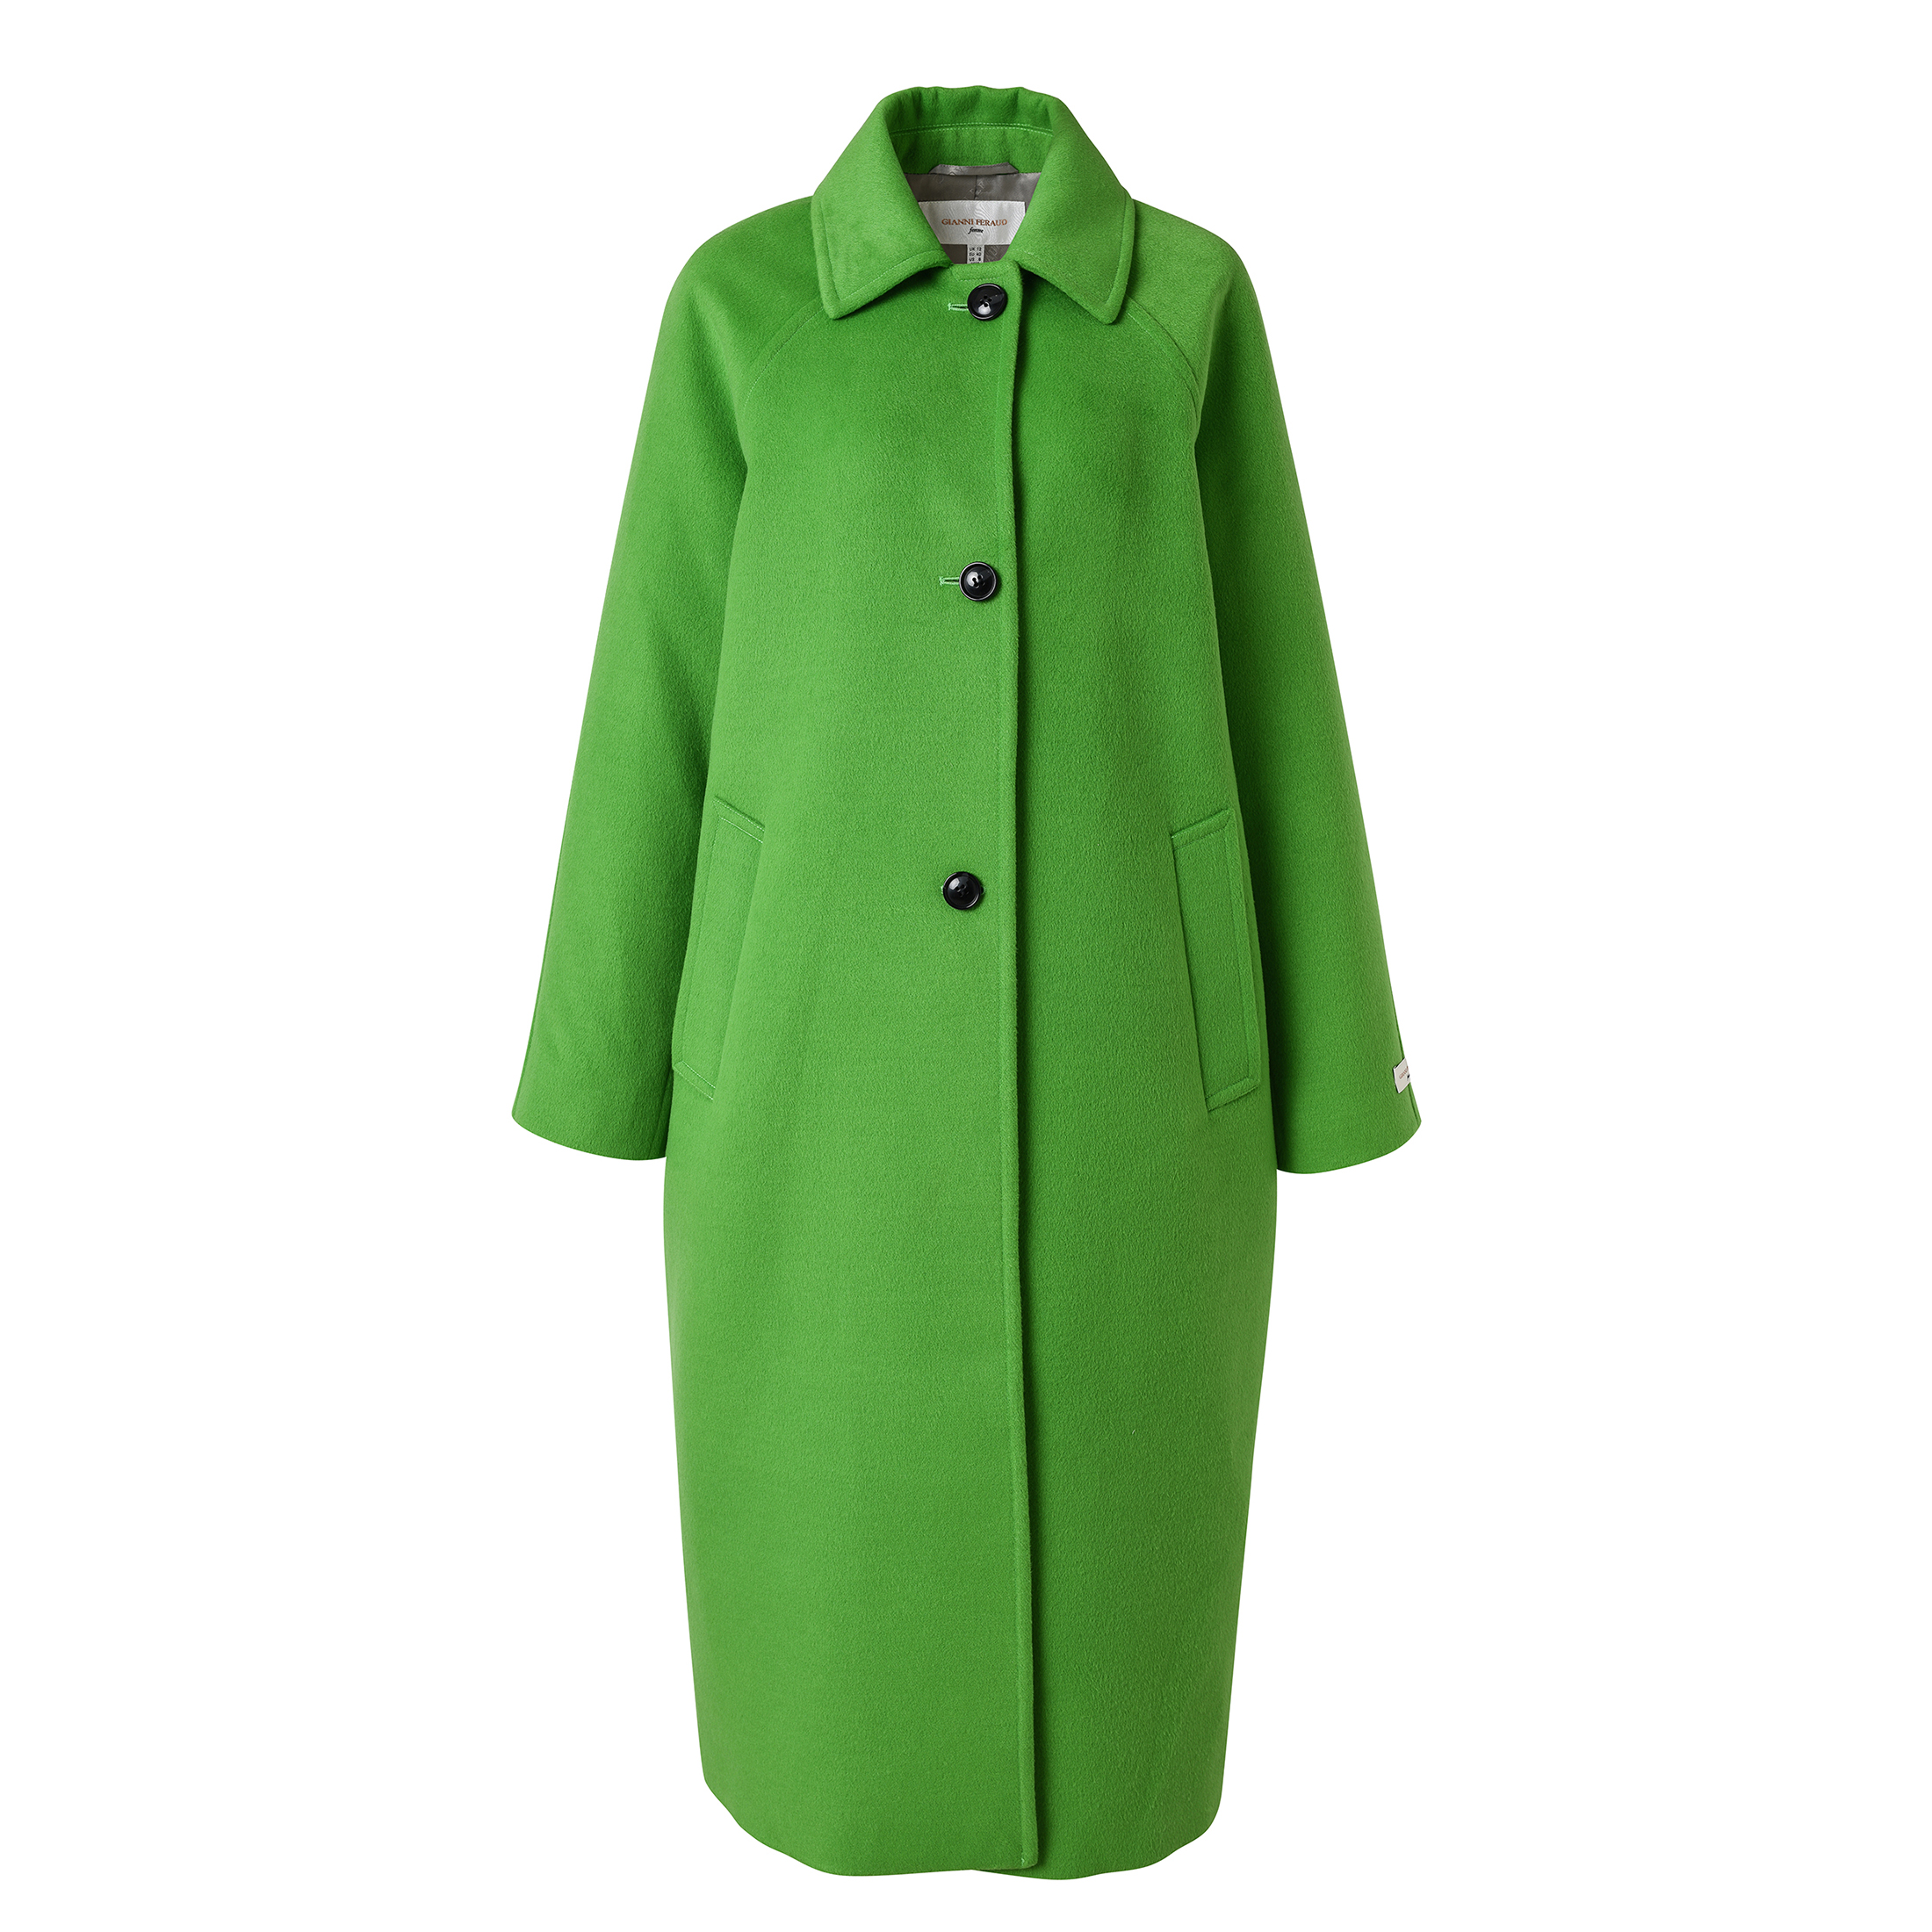 Wool-Like Coat - Women Fomal Coat Long Winter Warm Coat